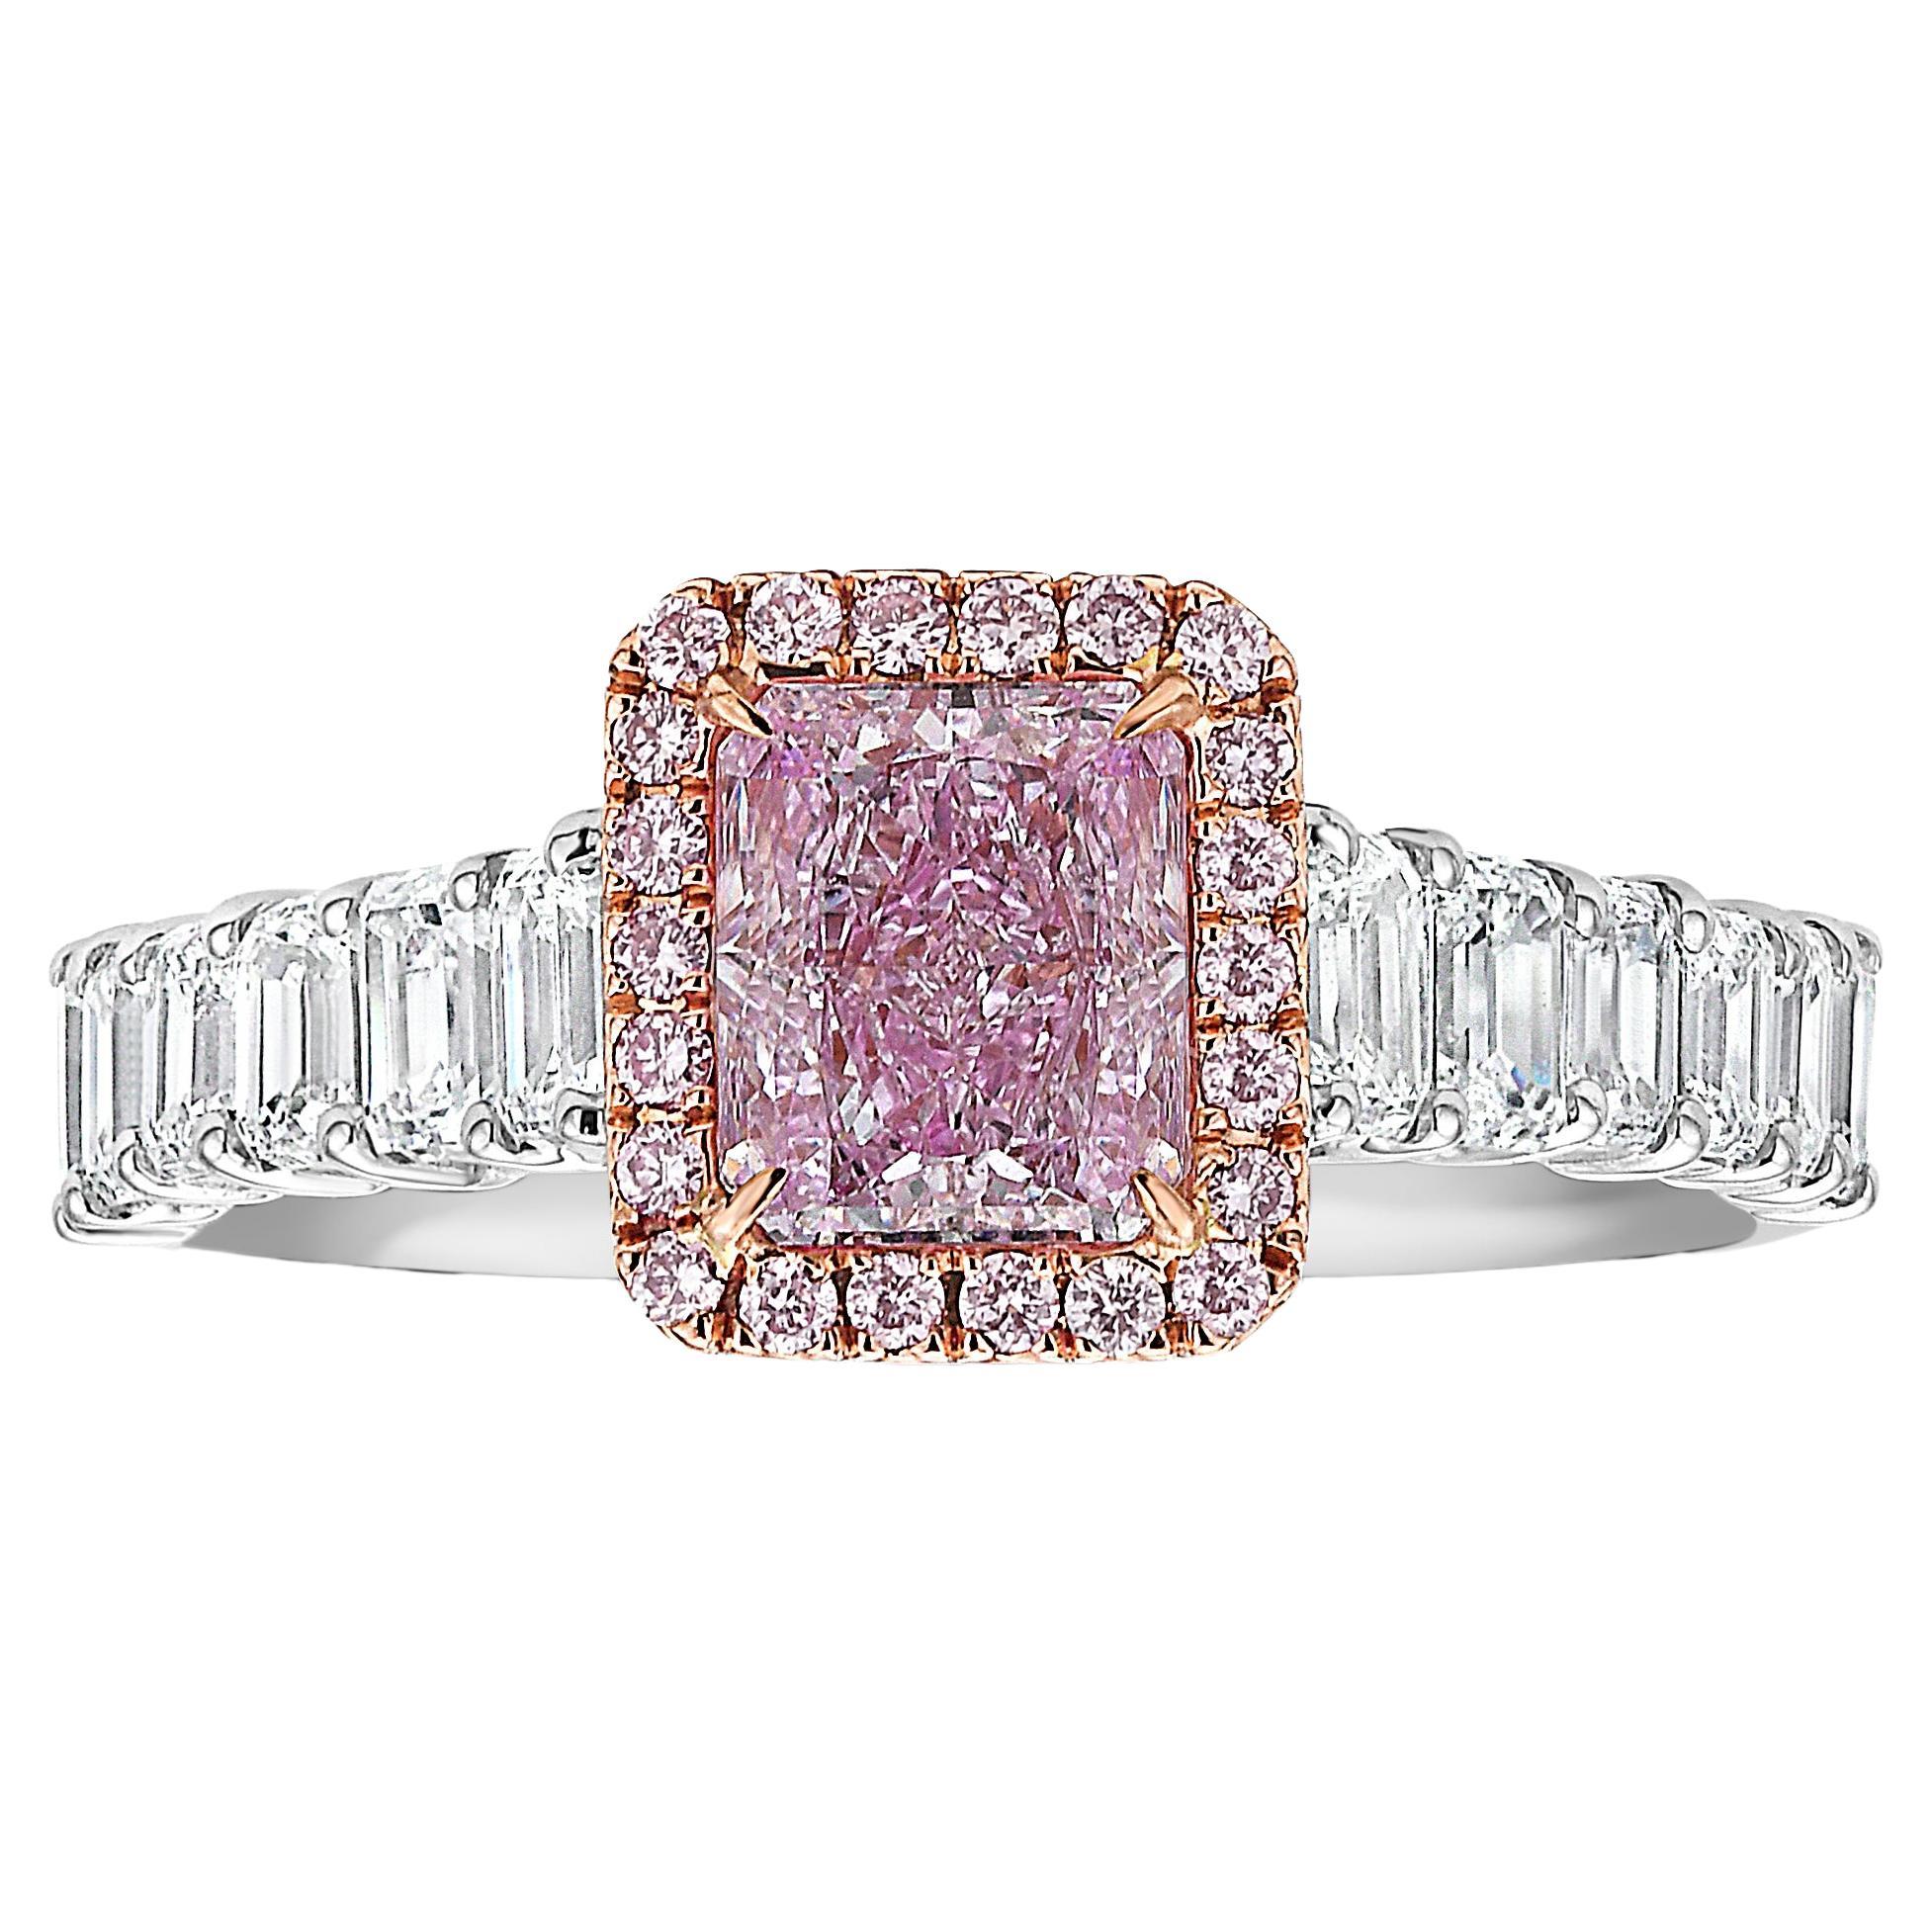 1 Carat GIA Light Pink Diamond Ring For Sale